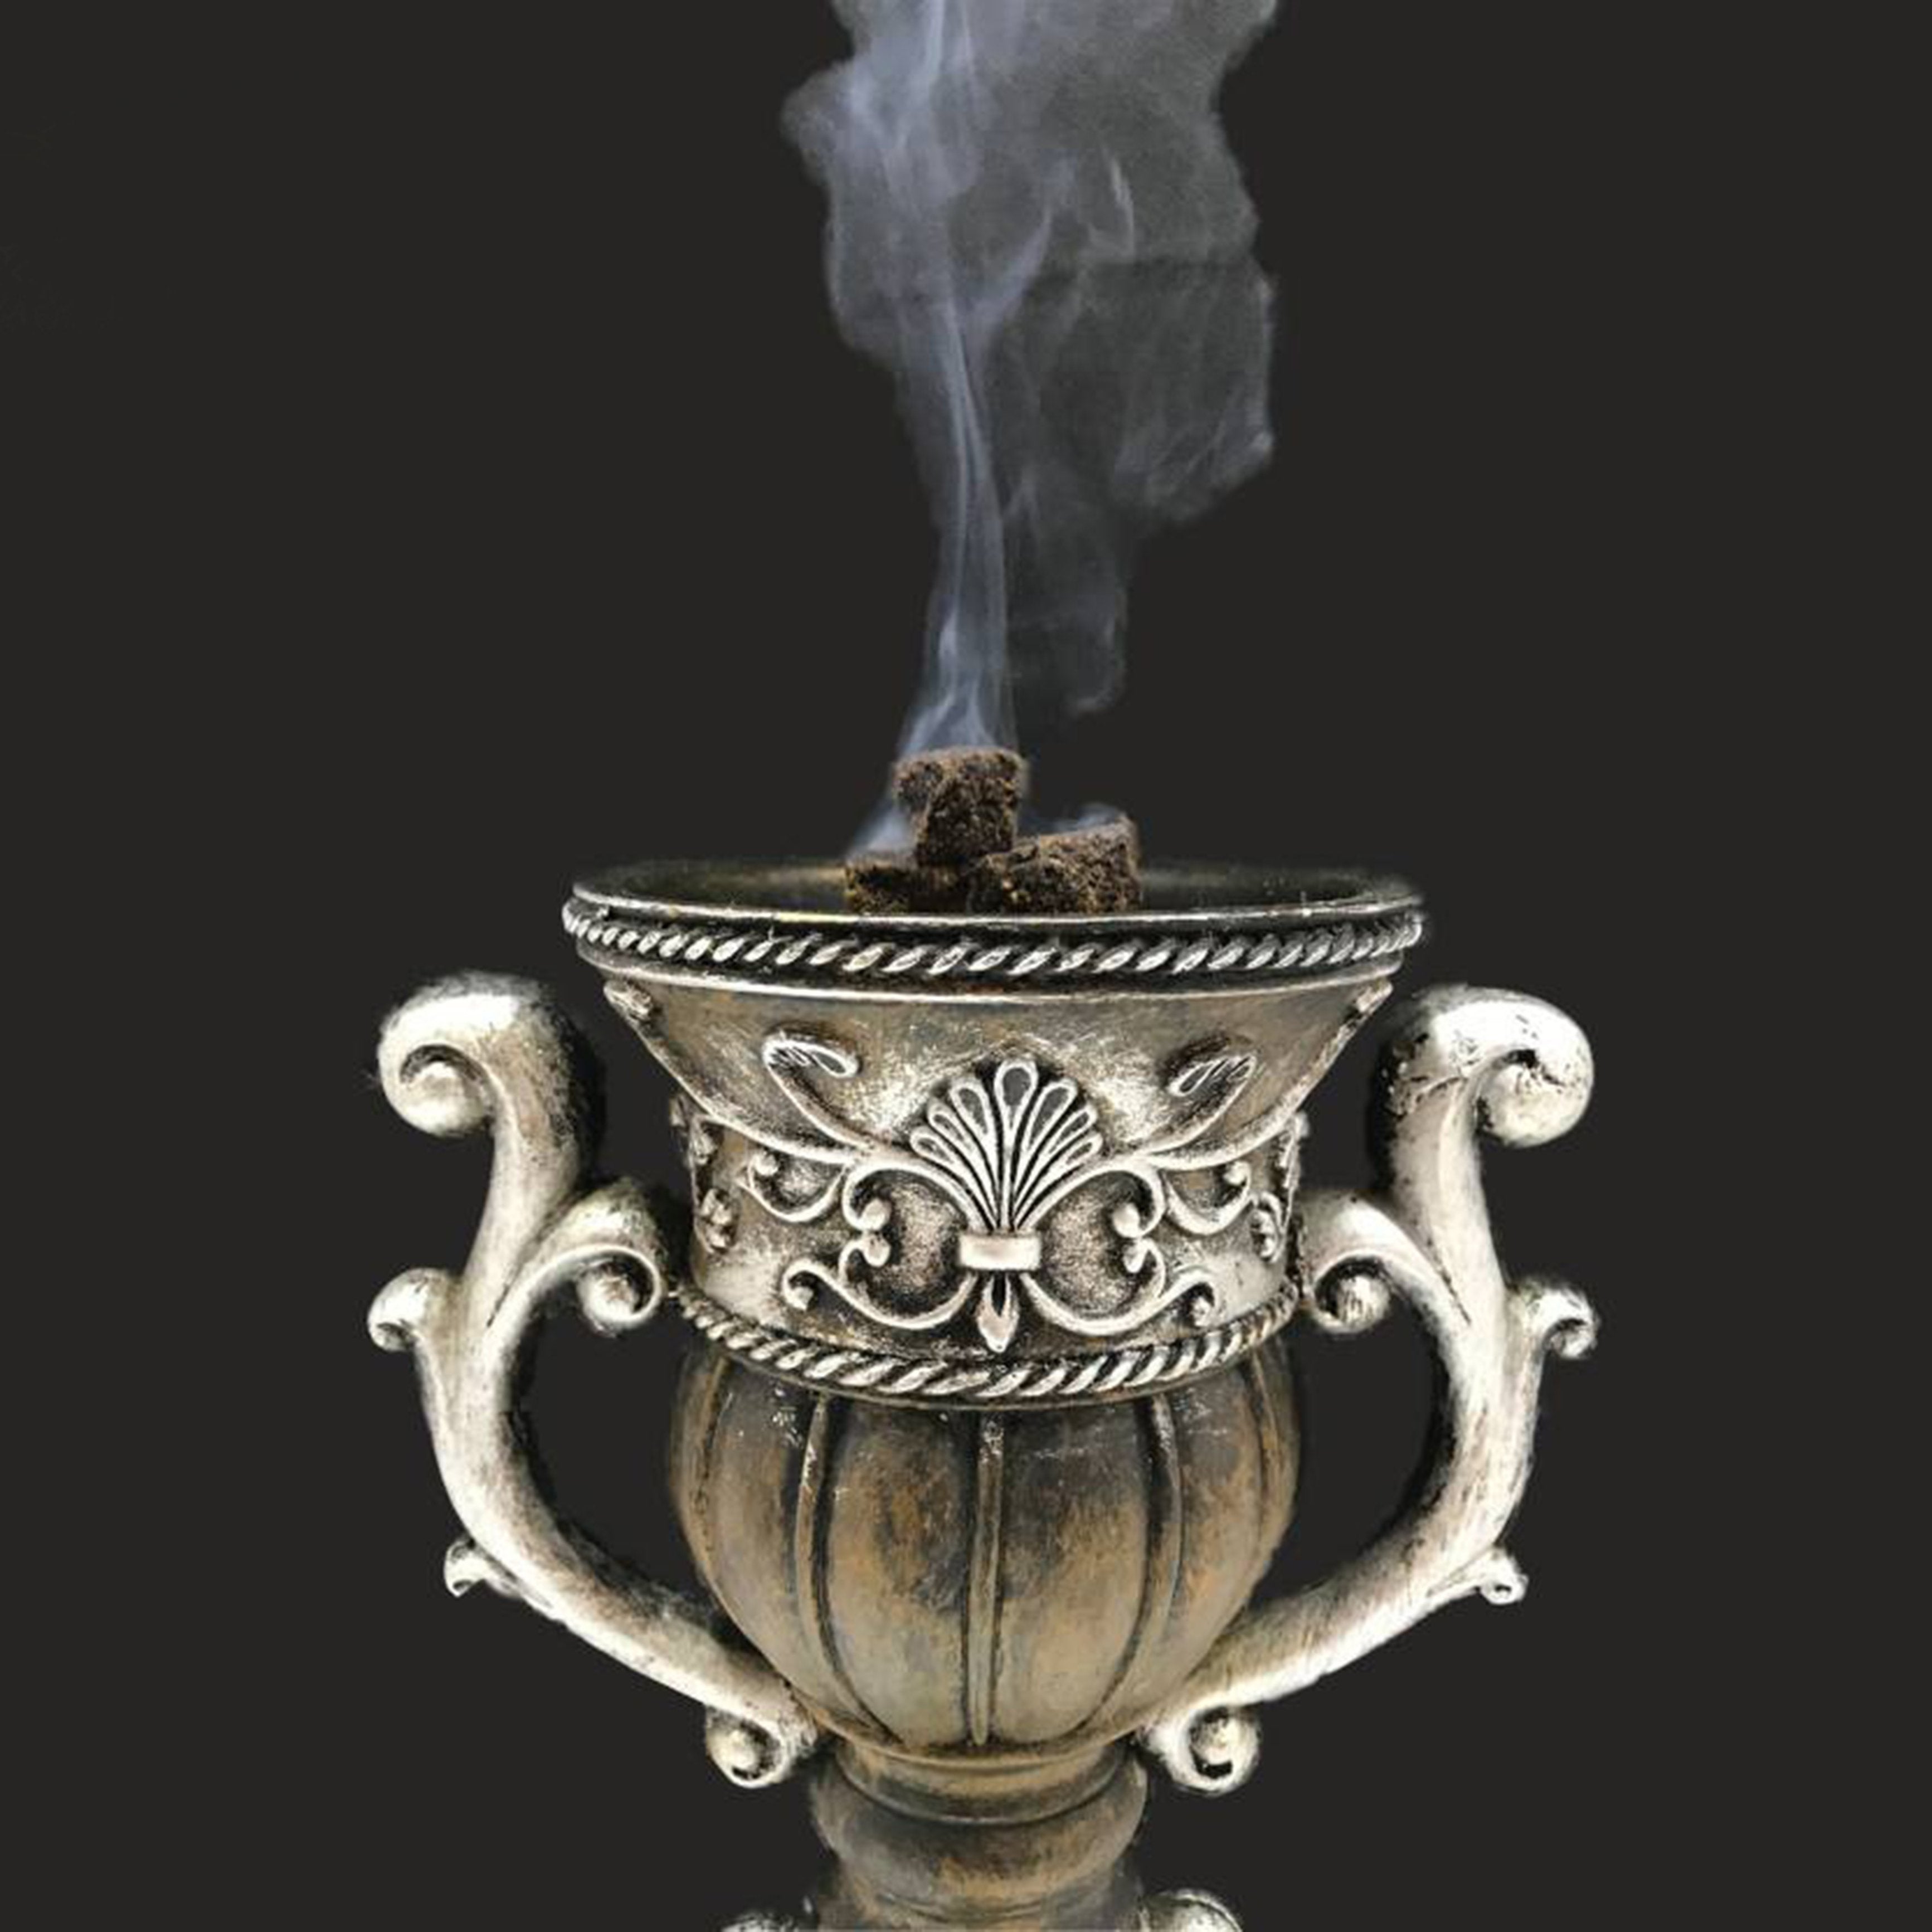 Al Haramain Bukhoor Sedra Bakhoor Burners Fragrance Paste Pack of 12